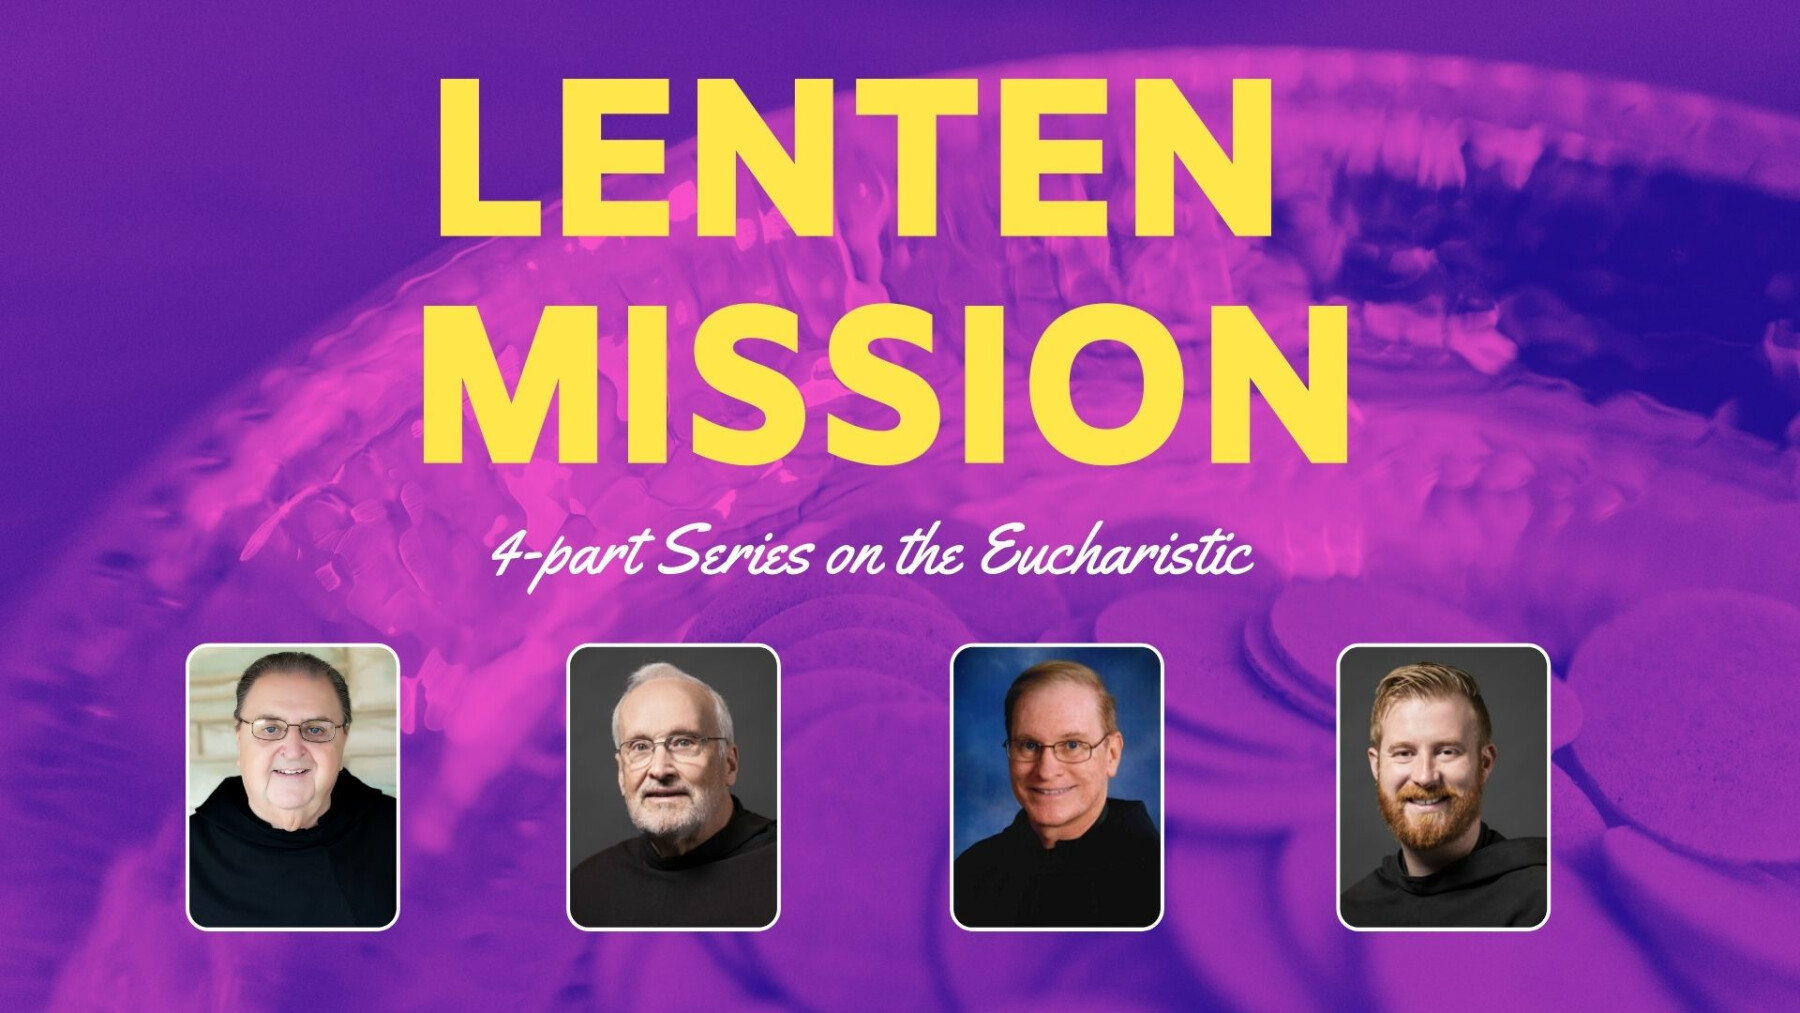 Lenten Mission - The Eucharist in Scripture